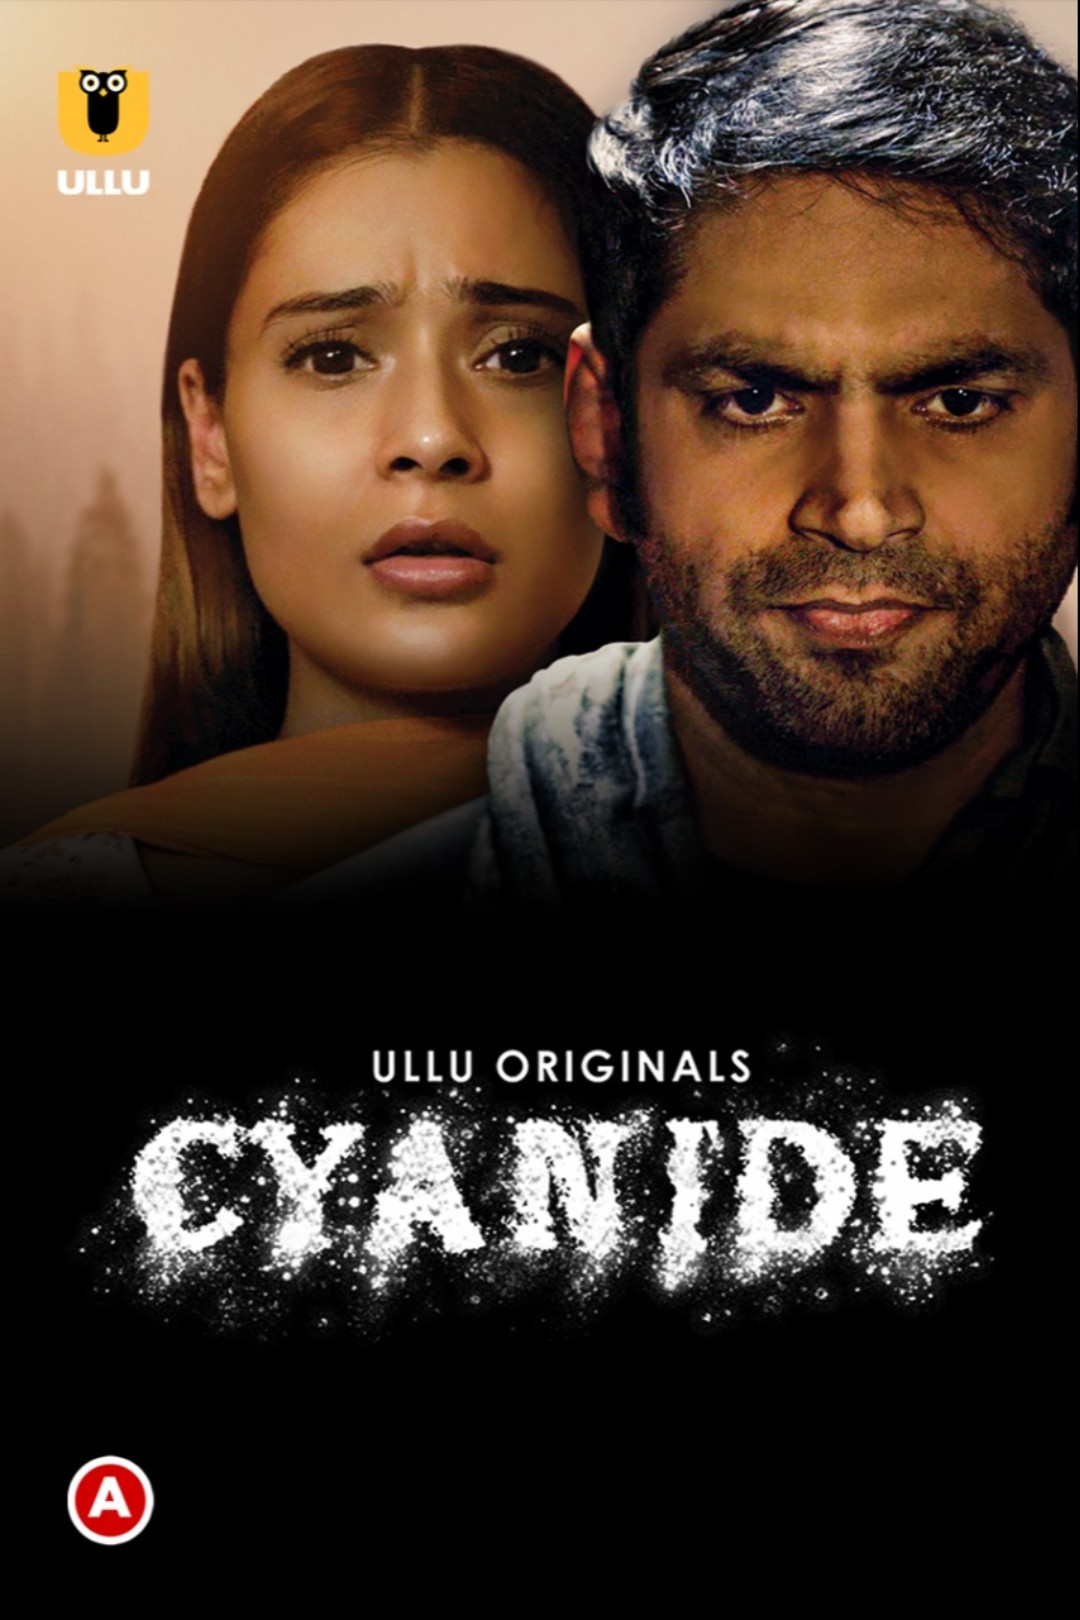 Cyanide 2021 S01 Hindi Ullu Originals Complete Web Series 1080p HDRip 1.2GB Download74ab4f22632fec85